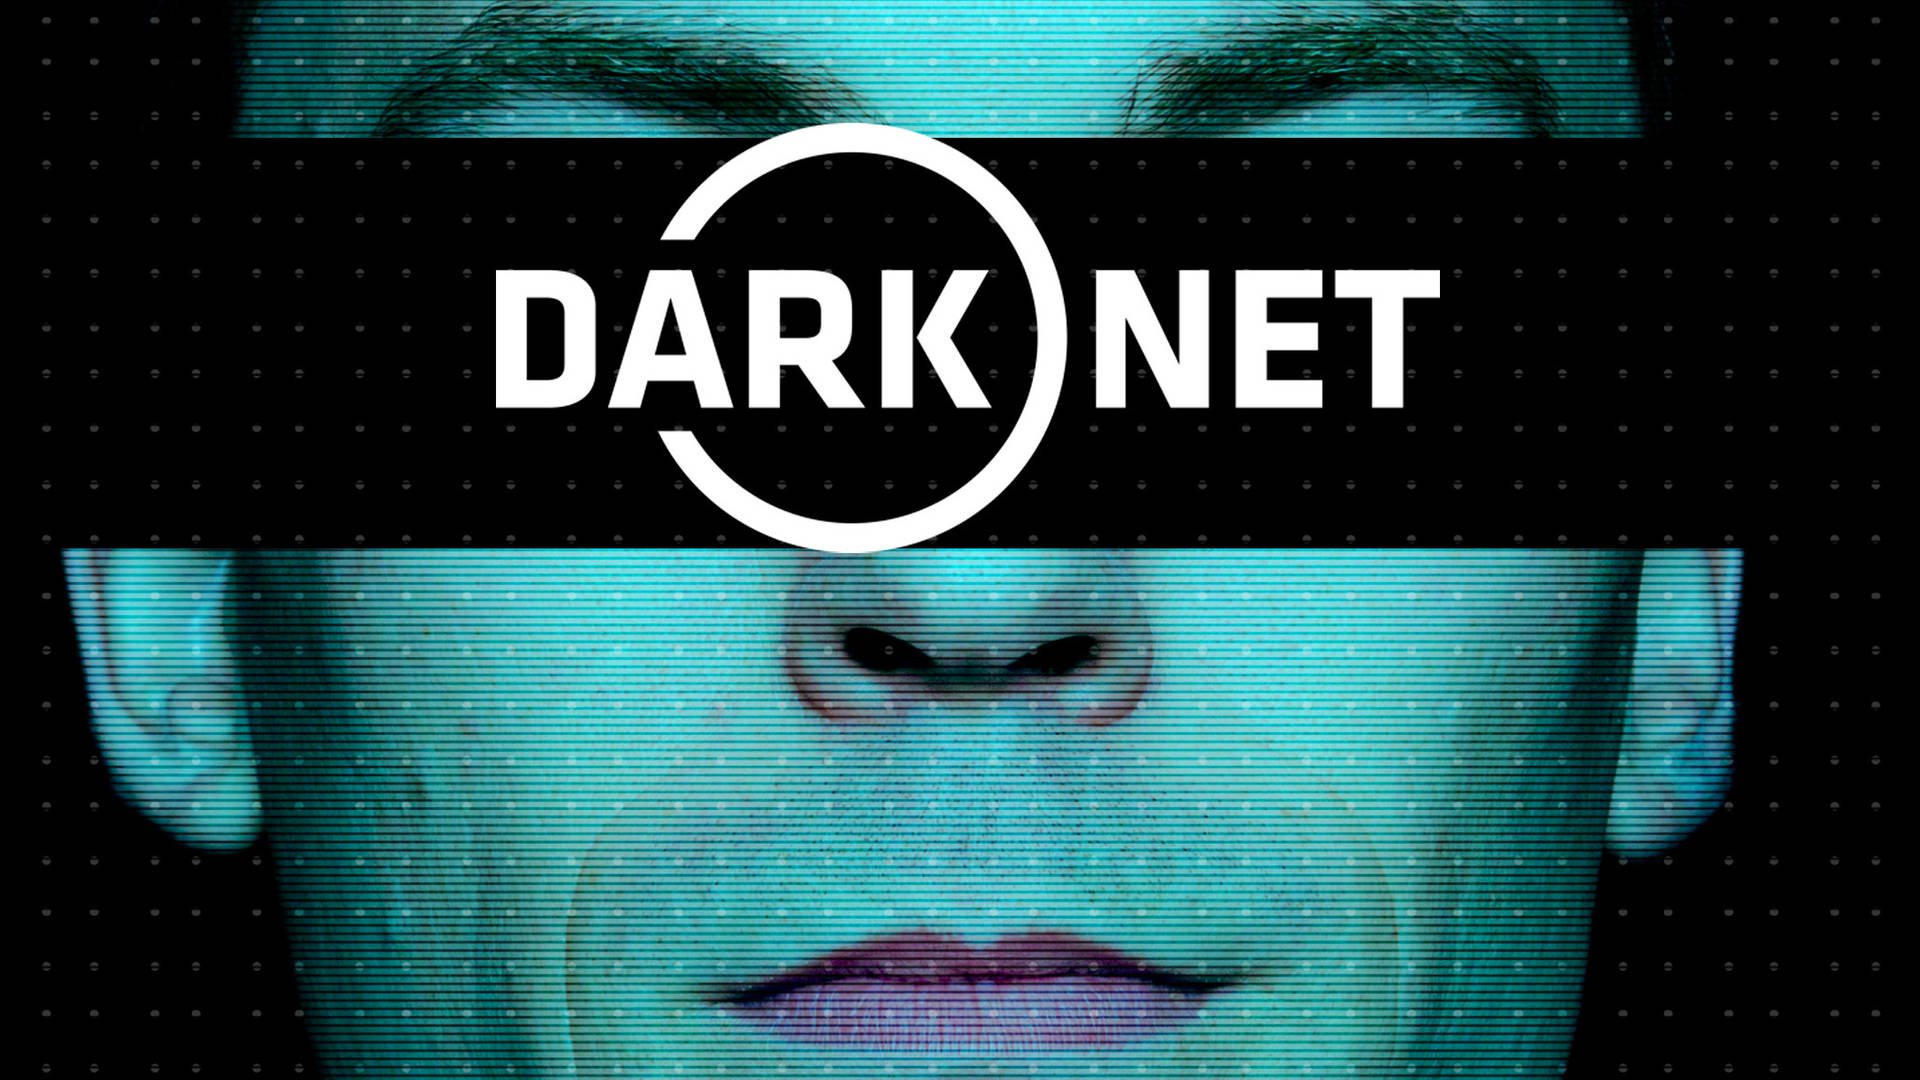 Darknet series браузеры на типо тора даркнет